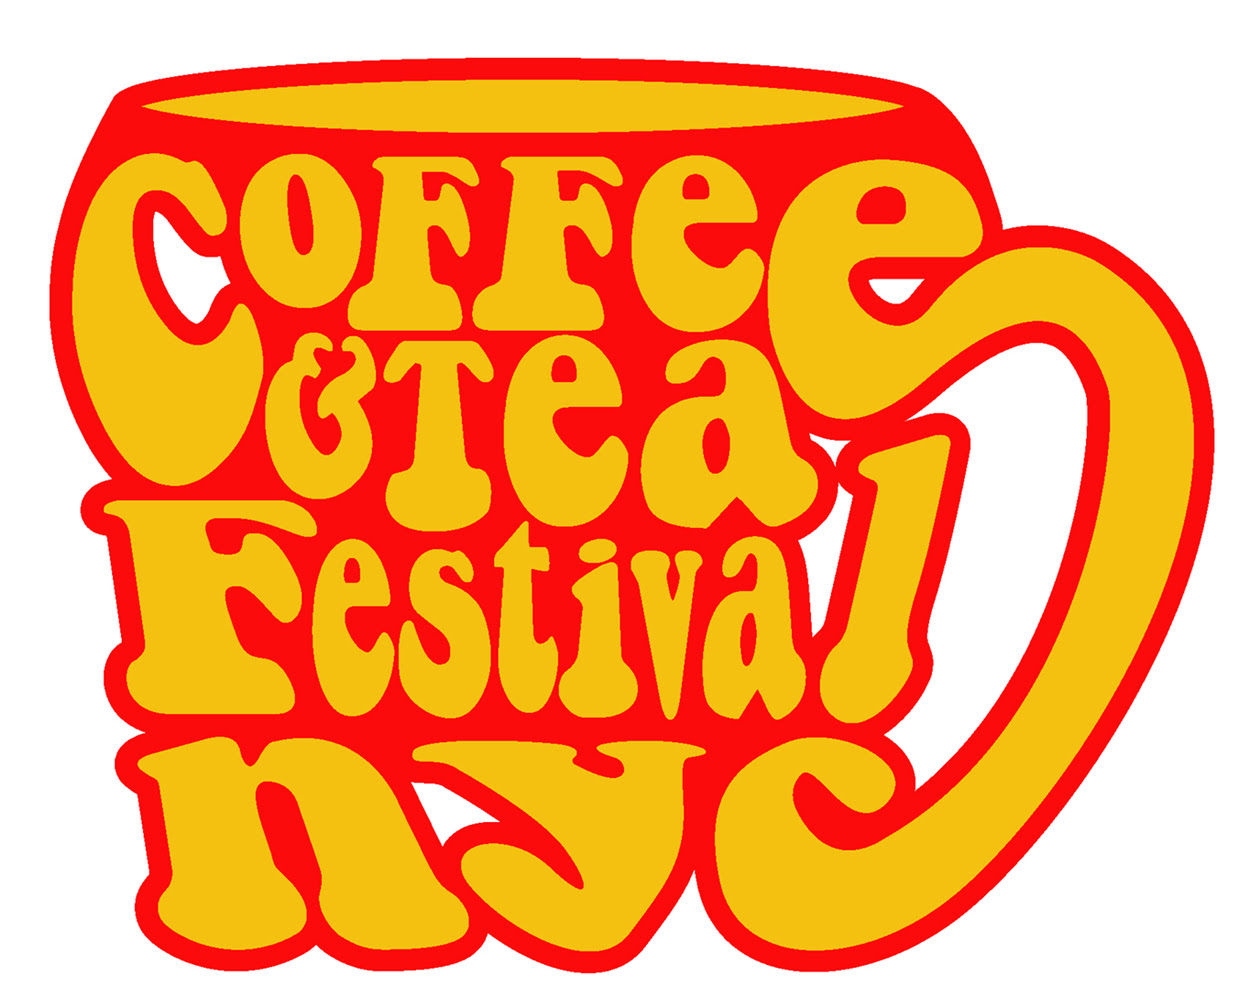 Coffee & Tea Festival NYC